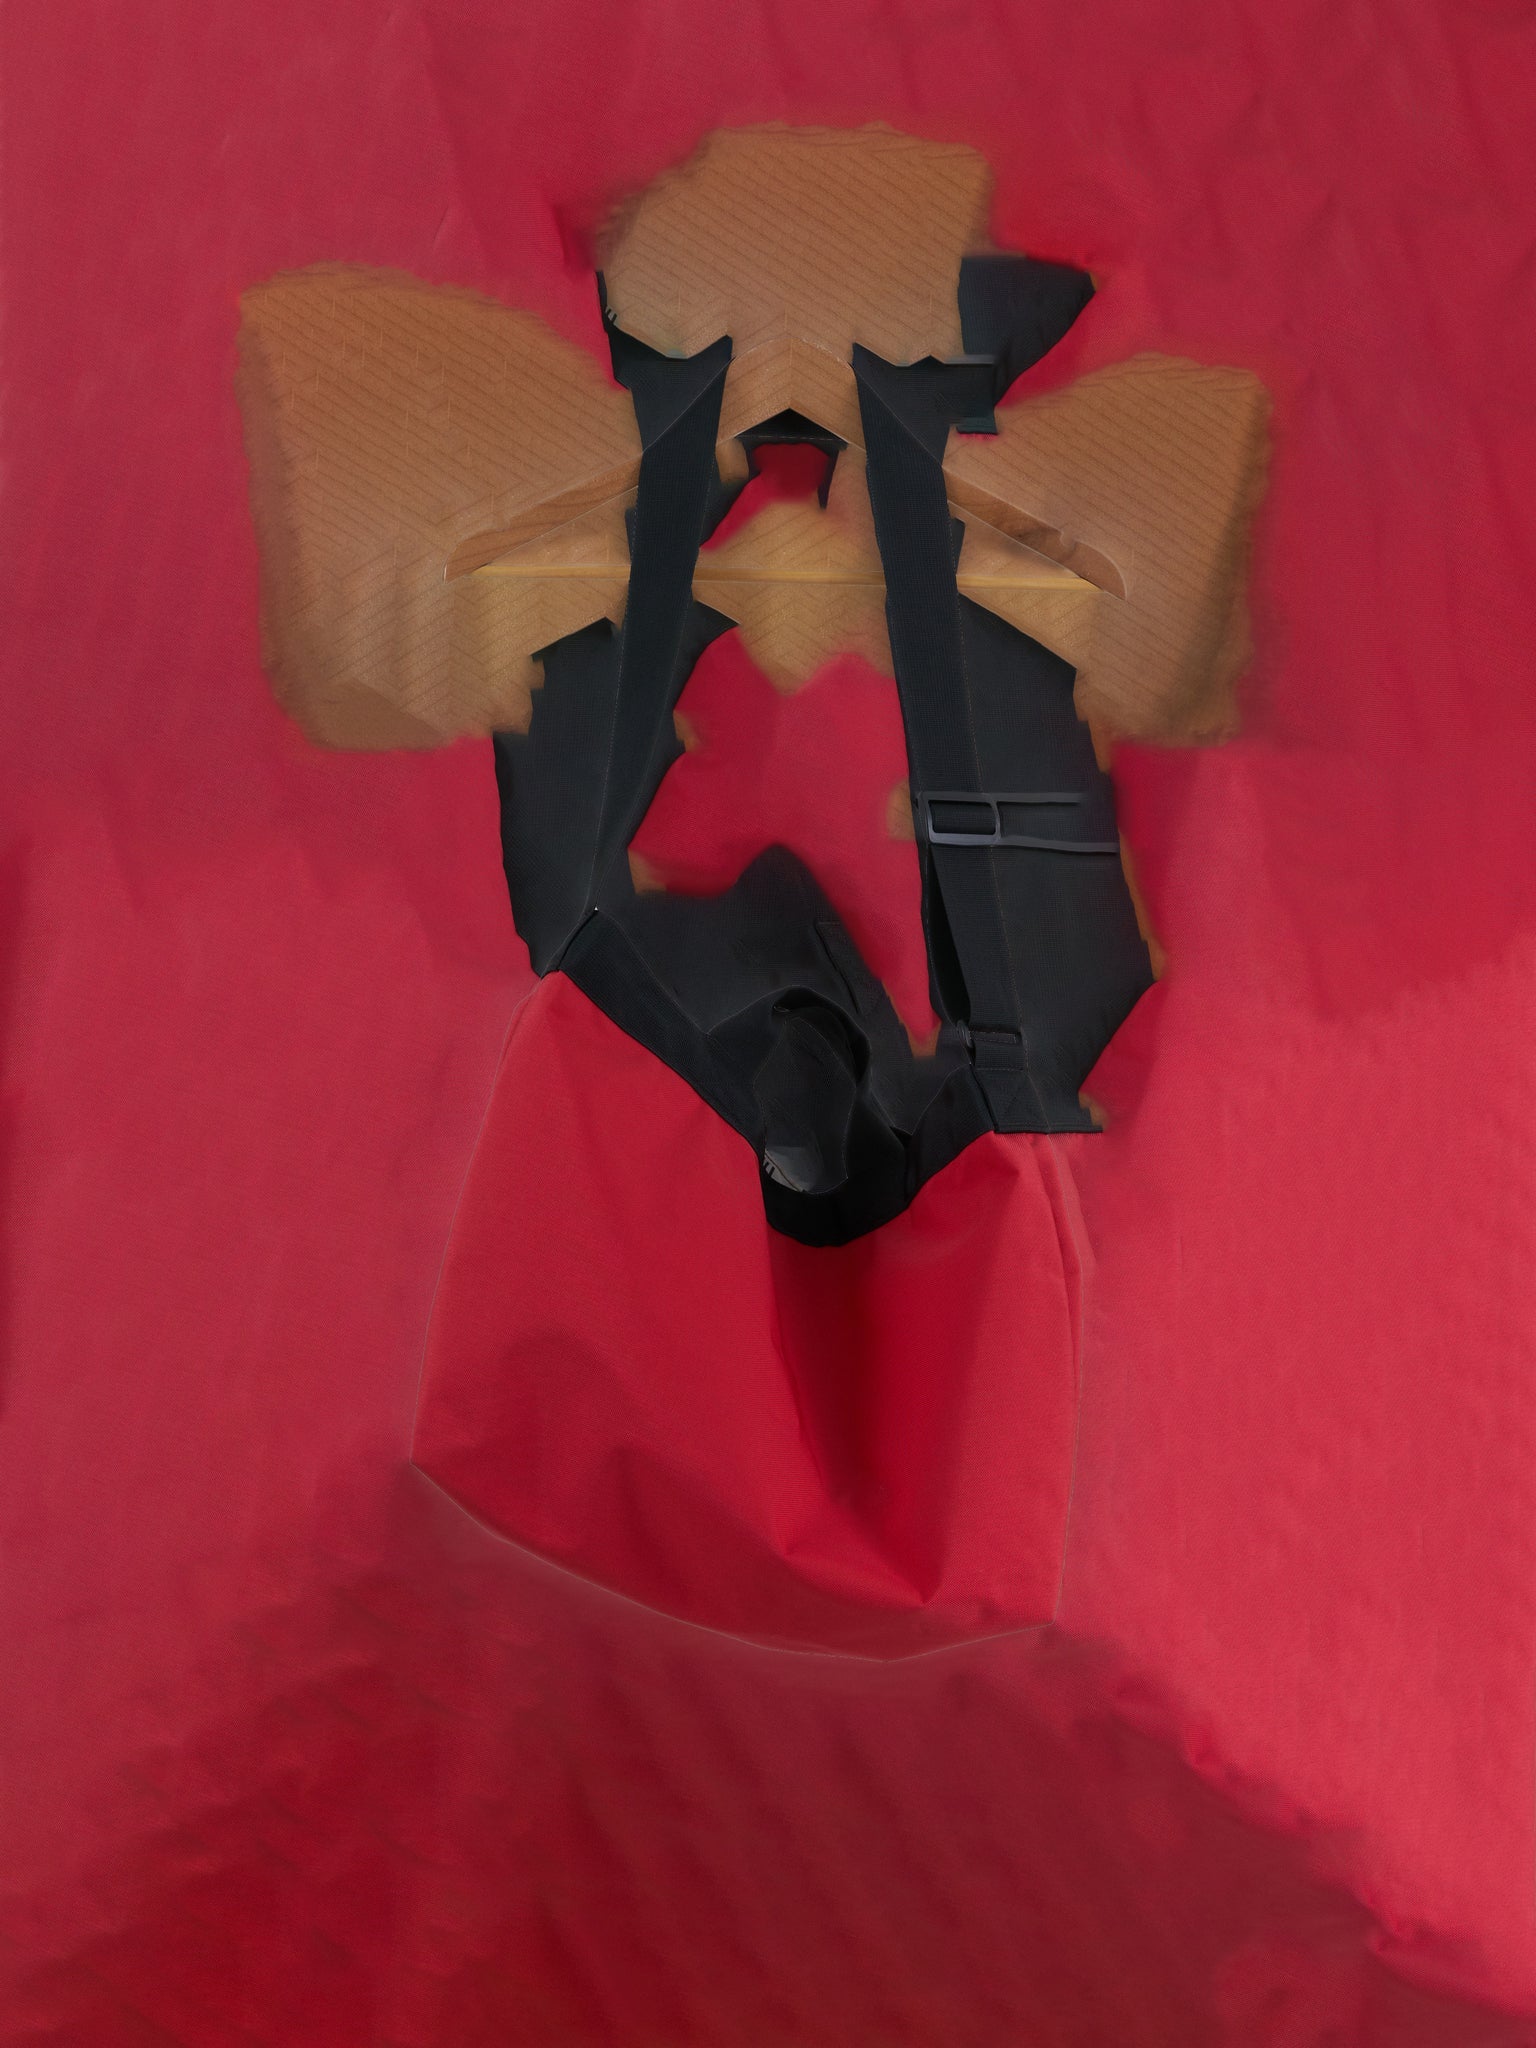 MHL Margaret Howell red nylon interior cover shoulder bag